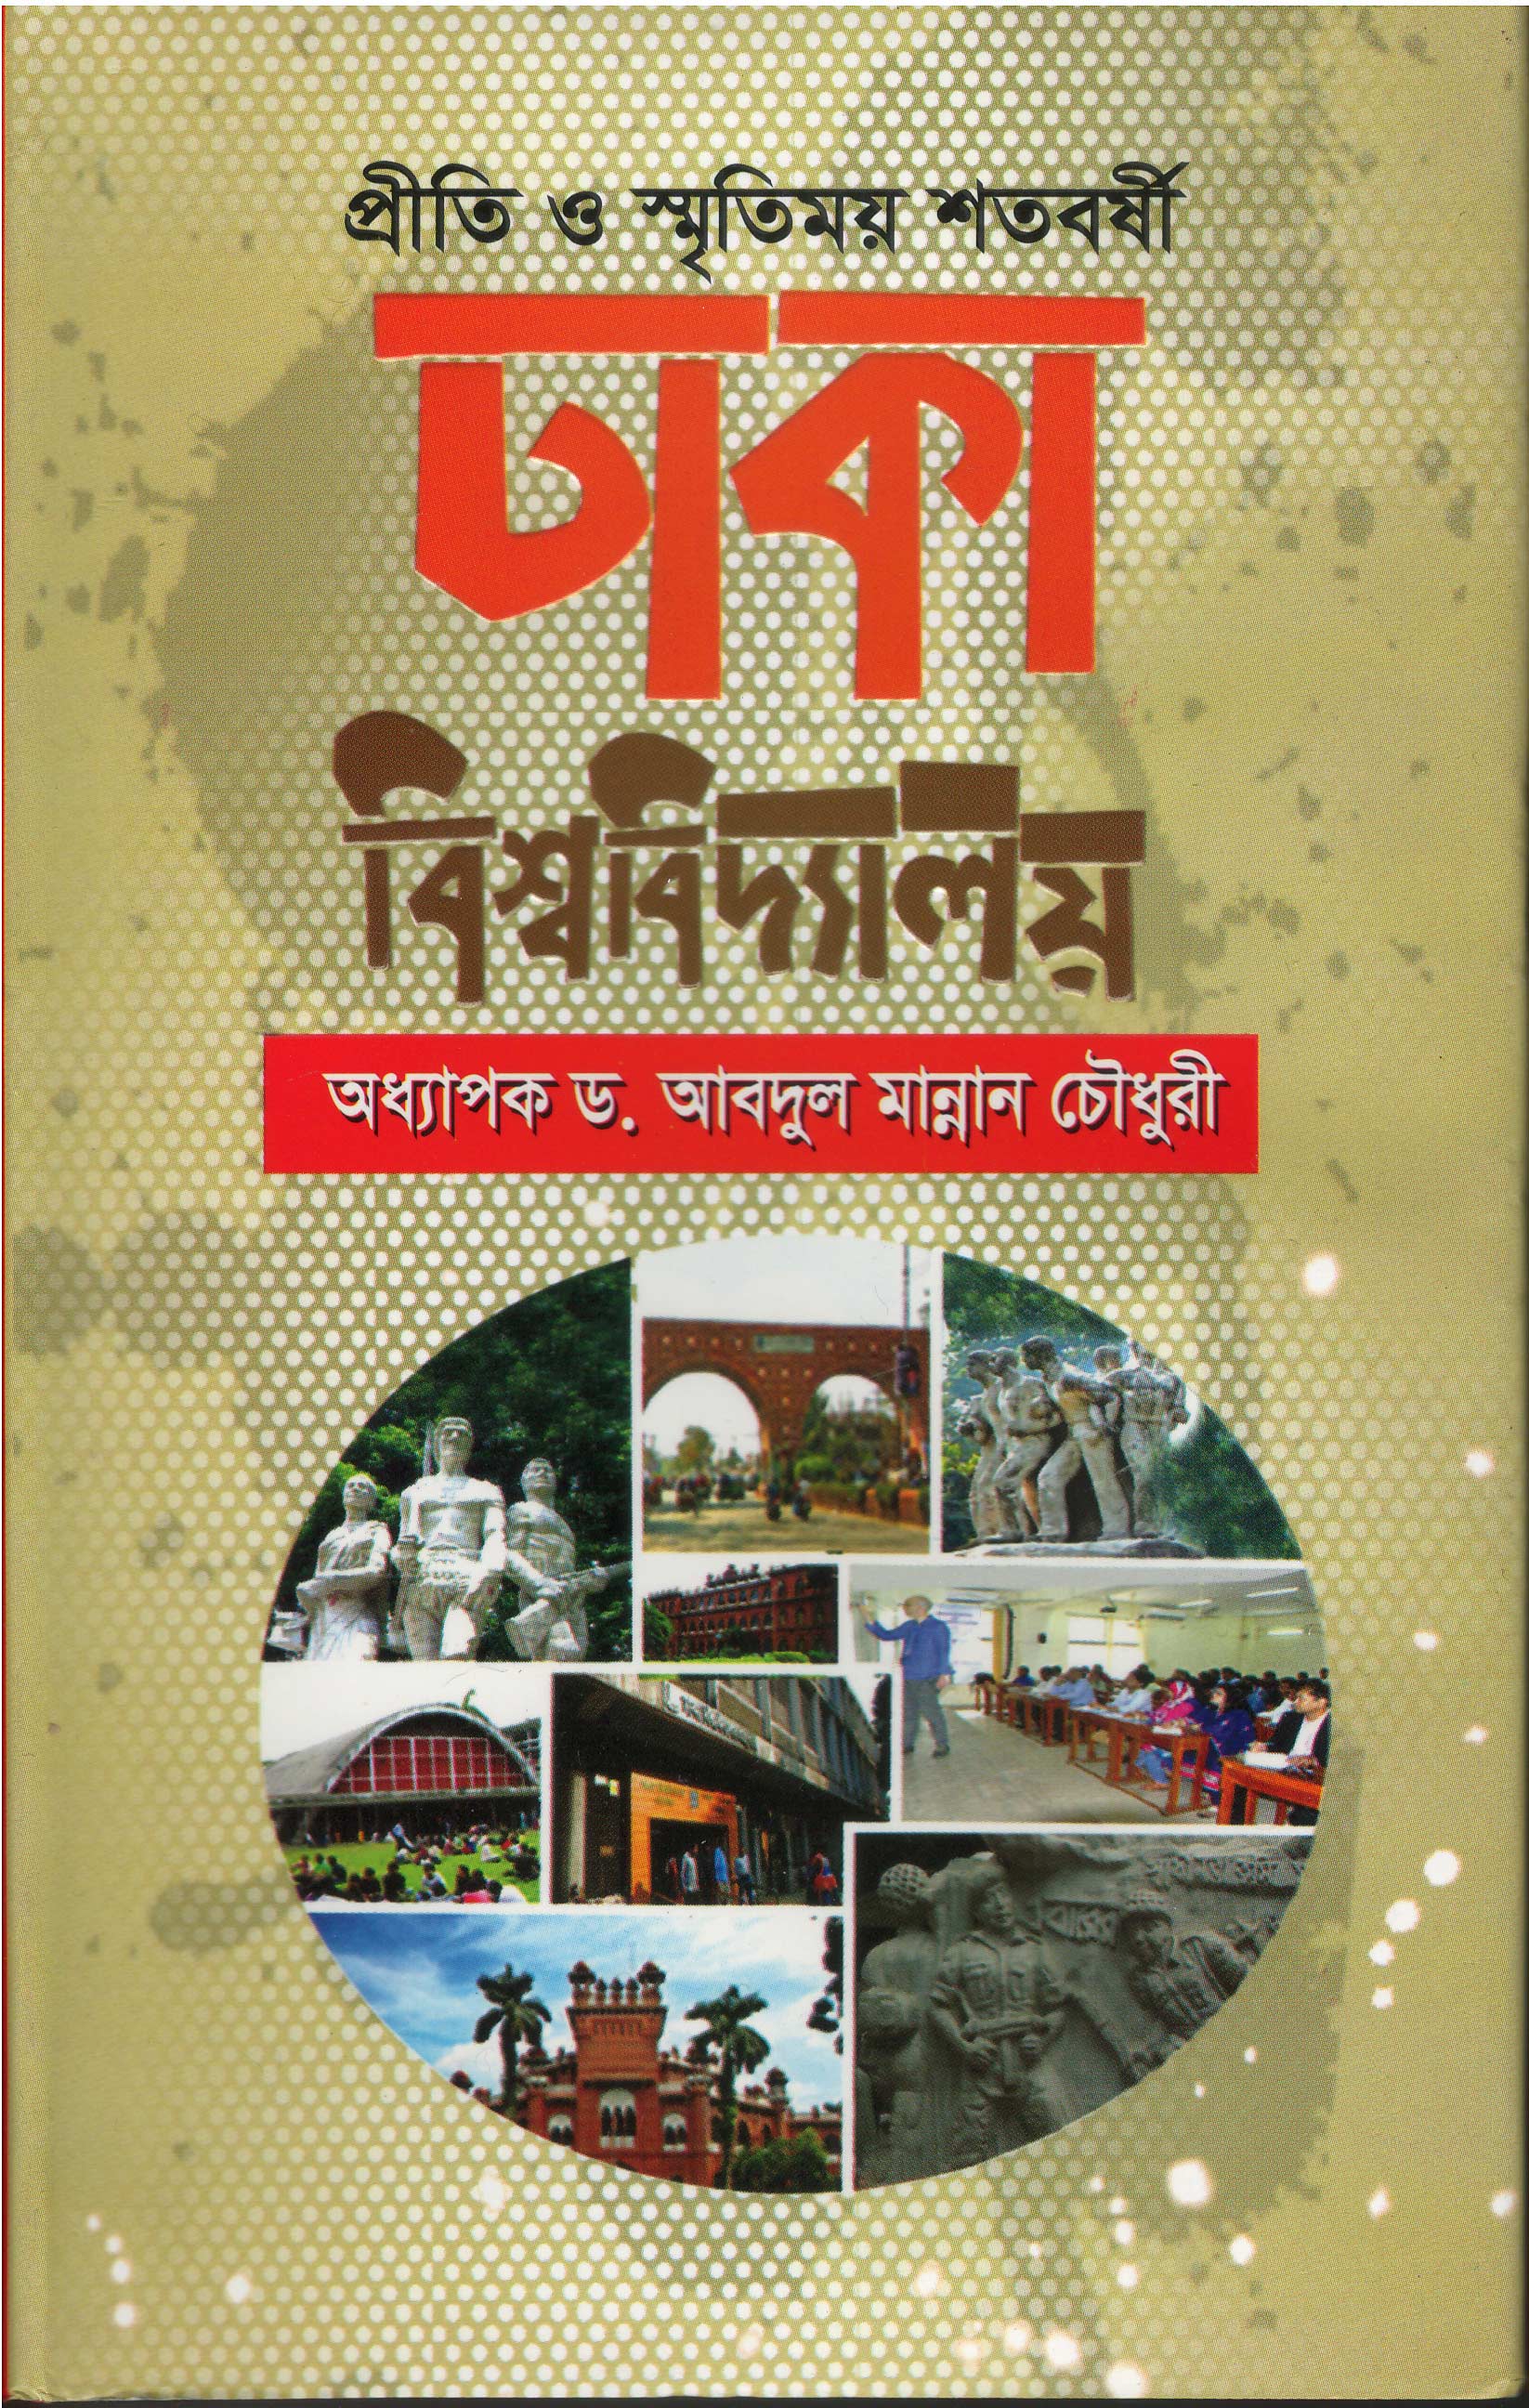 World University Vice Chancellor Book Dhaka bisshobiddaloy